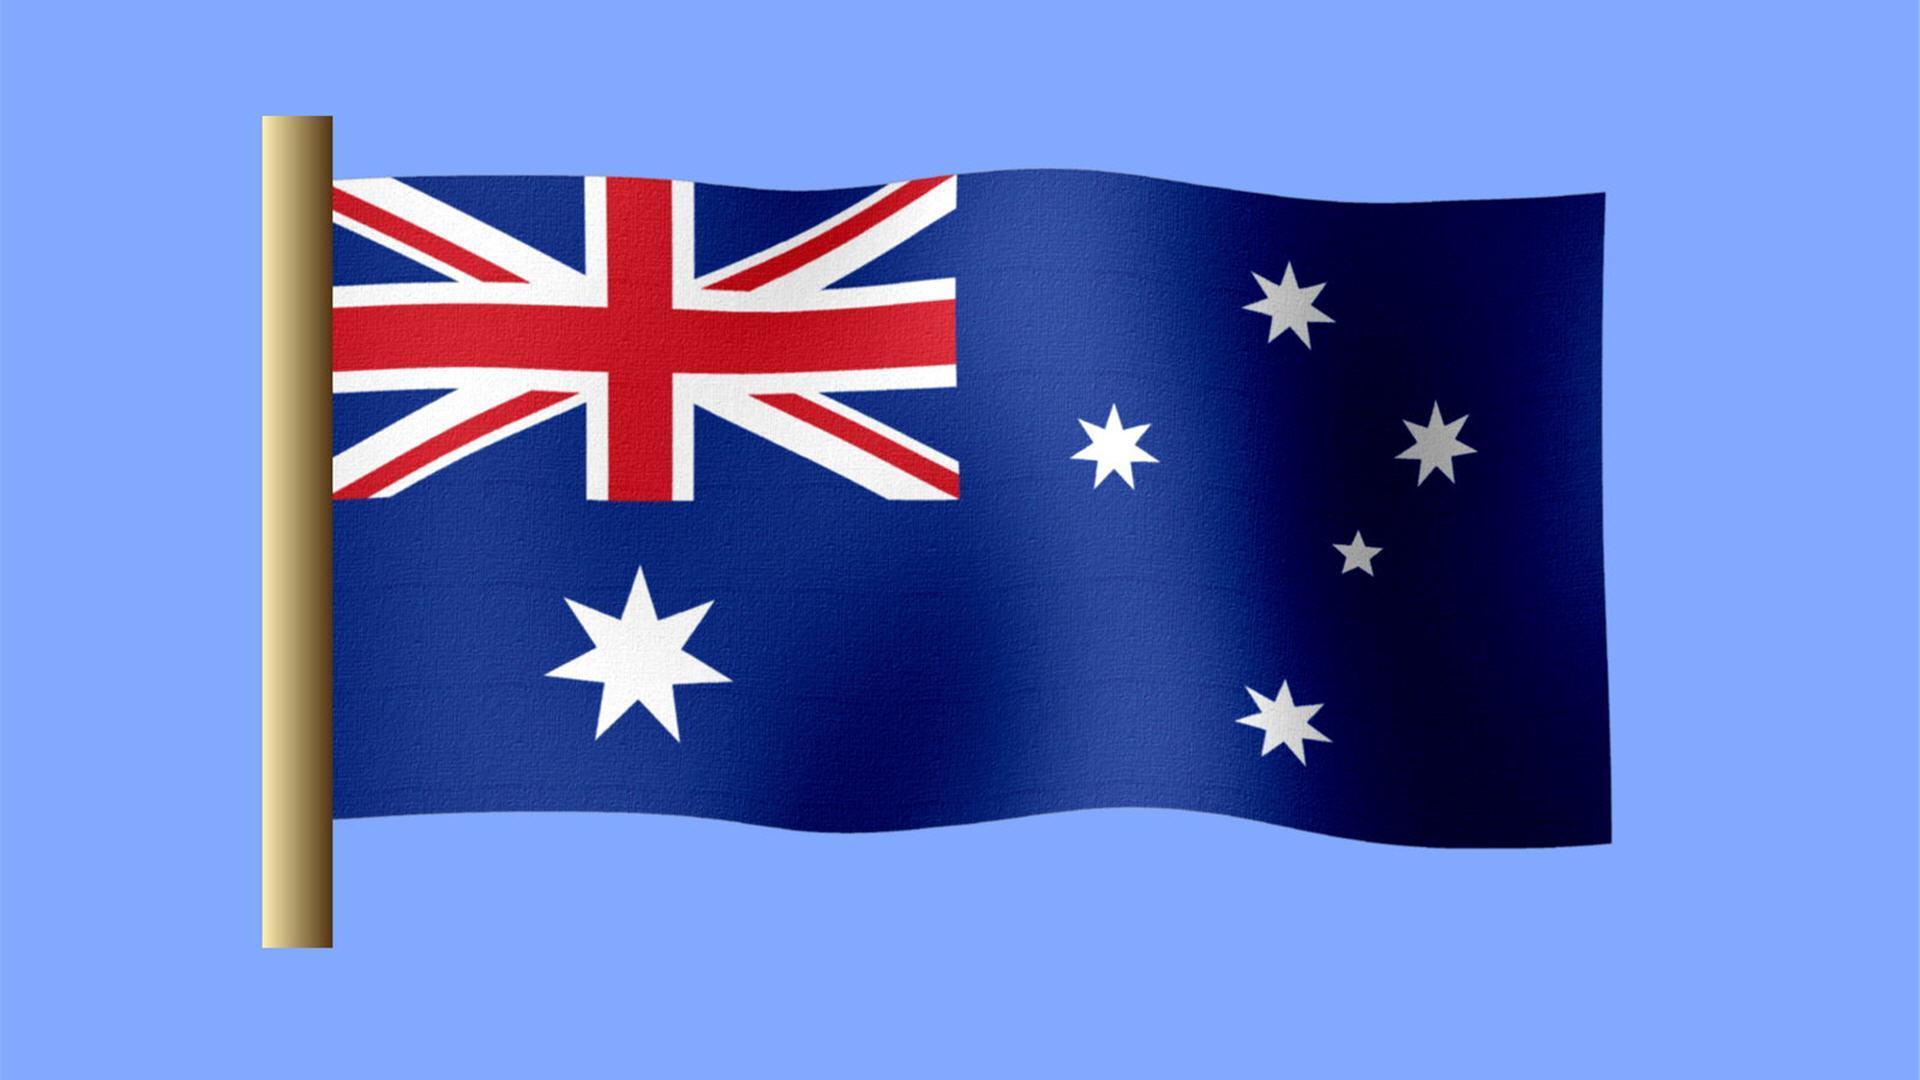 Australia Flag Live Wallpaper for Android - APK Download